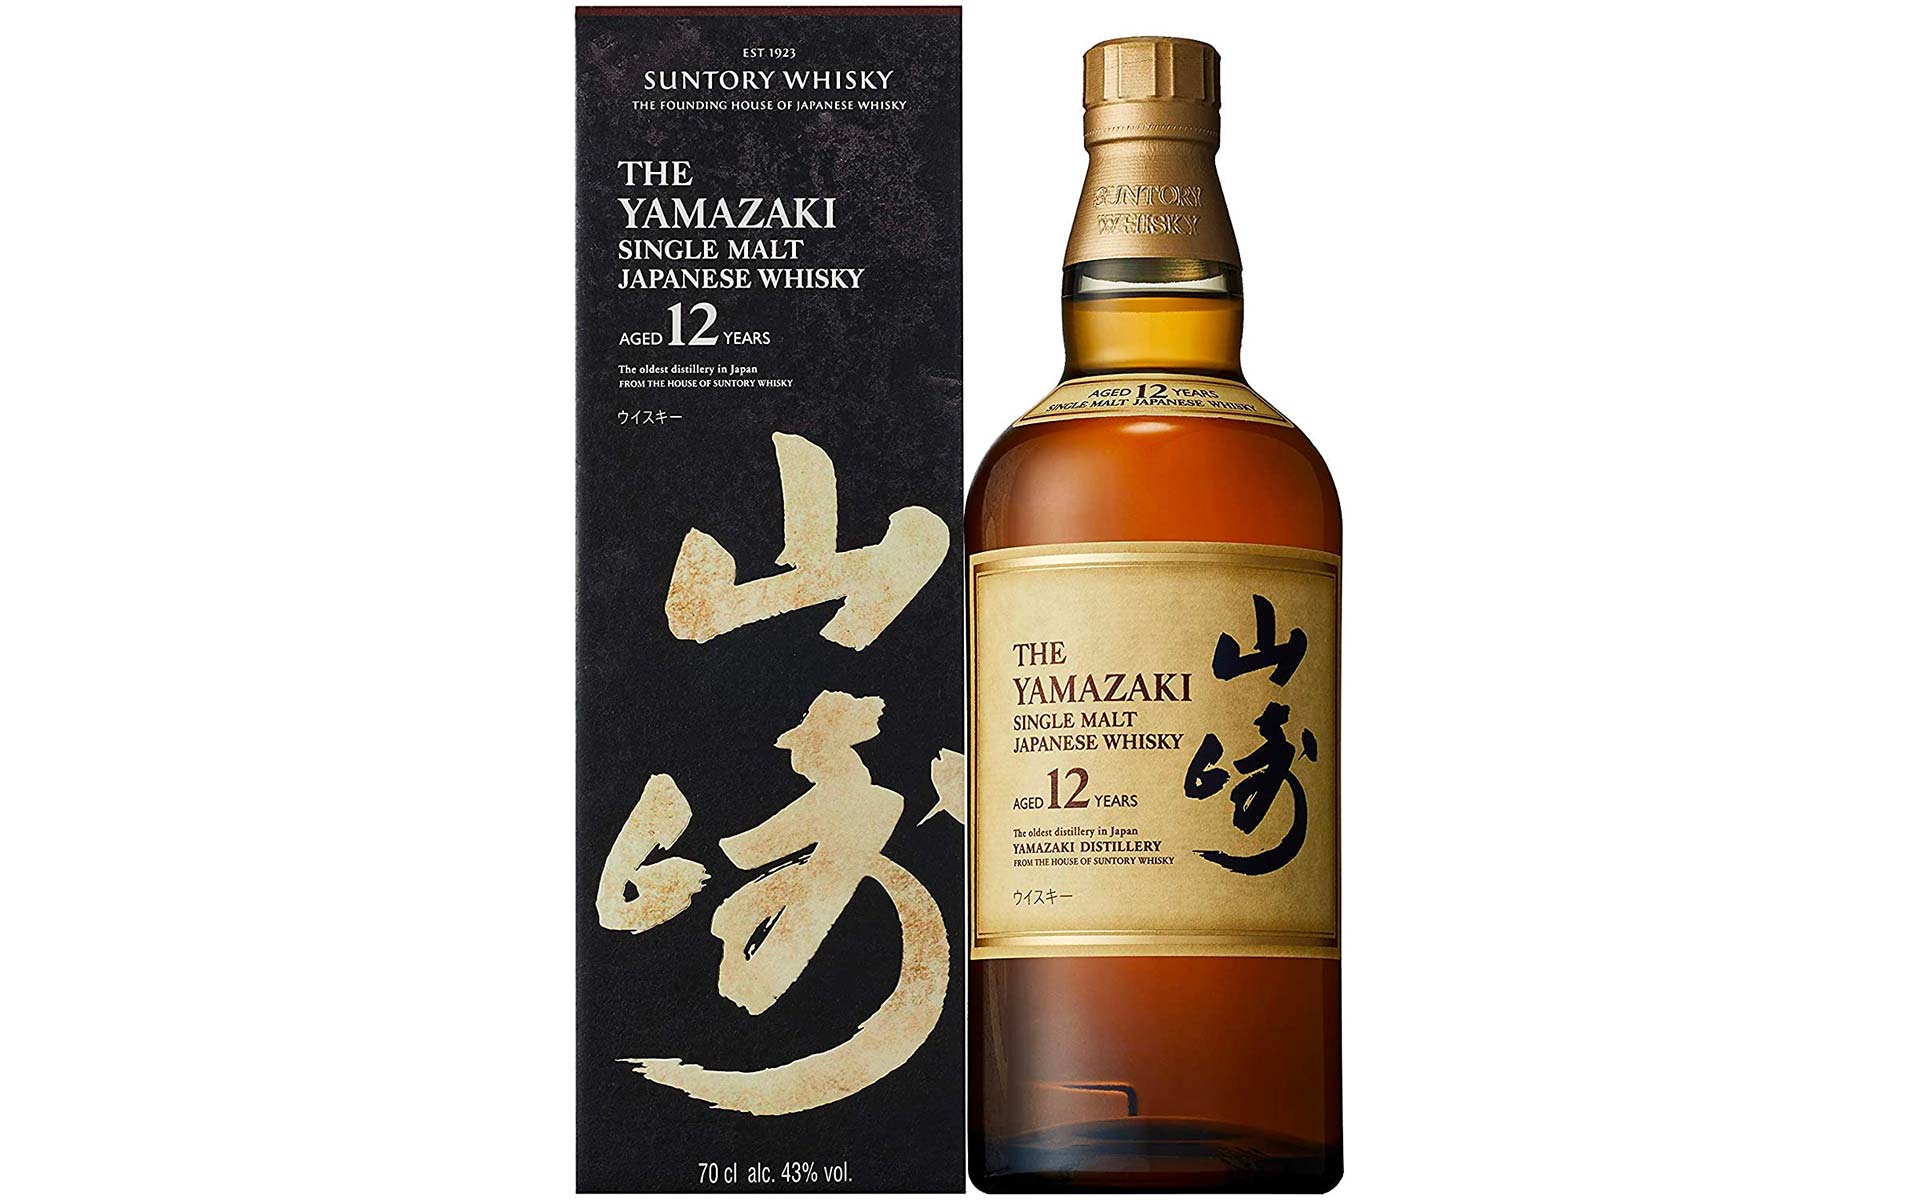 Whisky Japonais kaiji